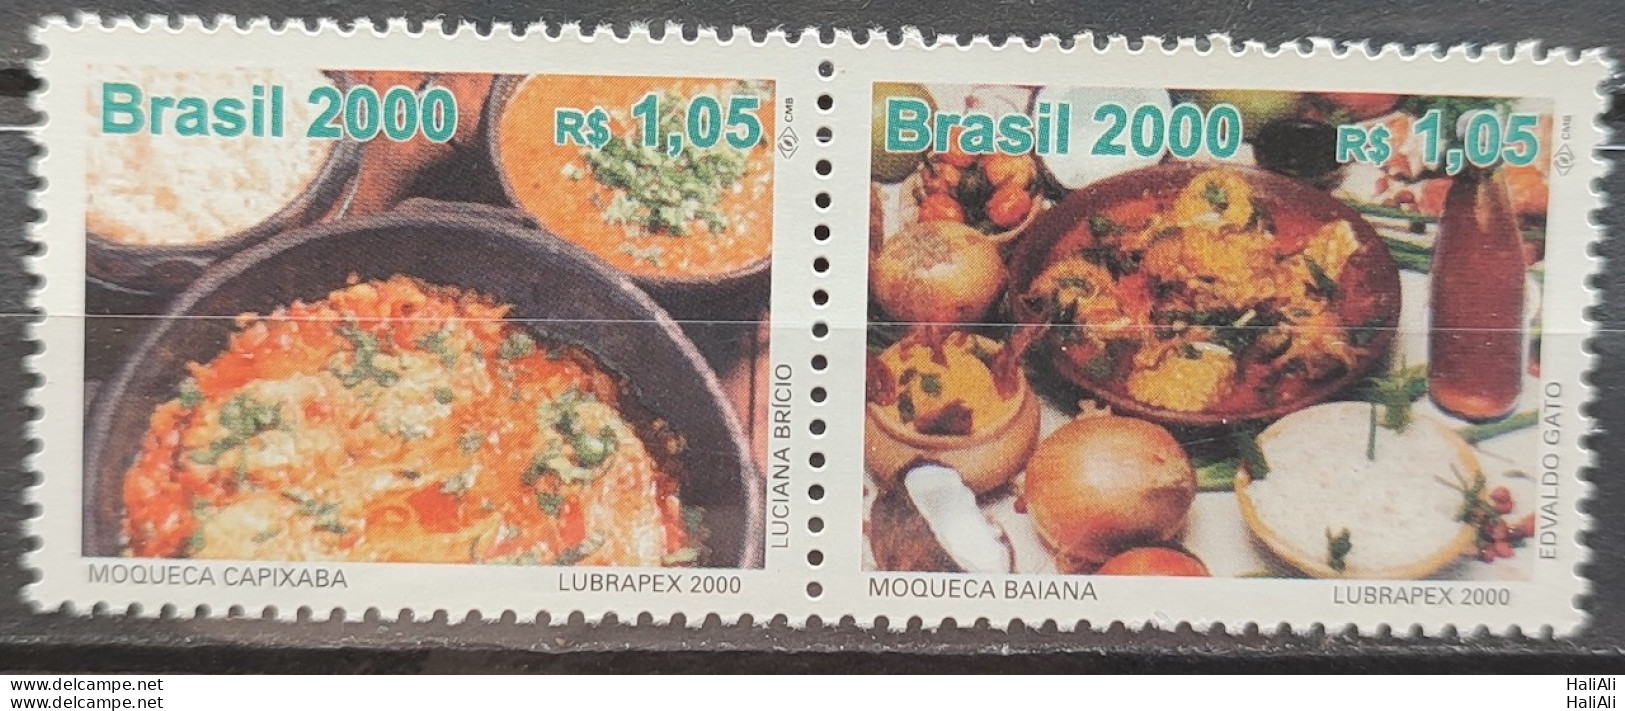 C 2246 Brazil Stamp Typical Dishes Moqueca Gastronomy 2000 Complete Series - Ongebruikt